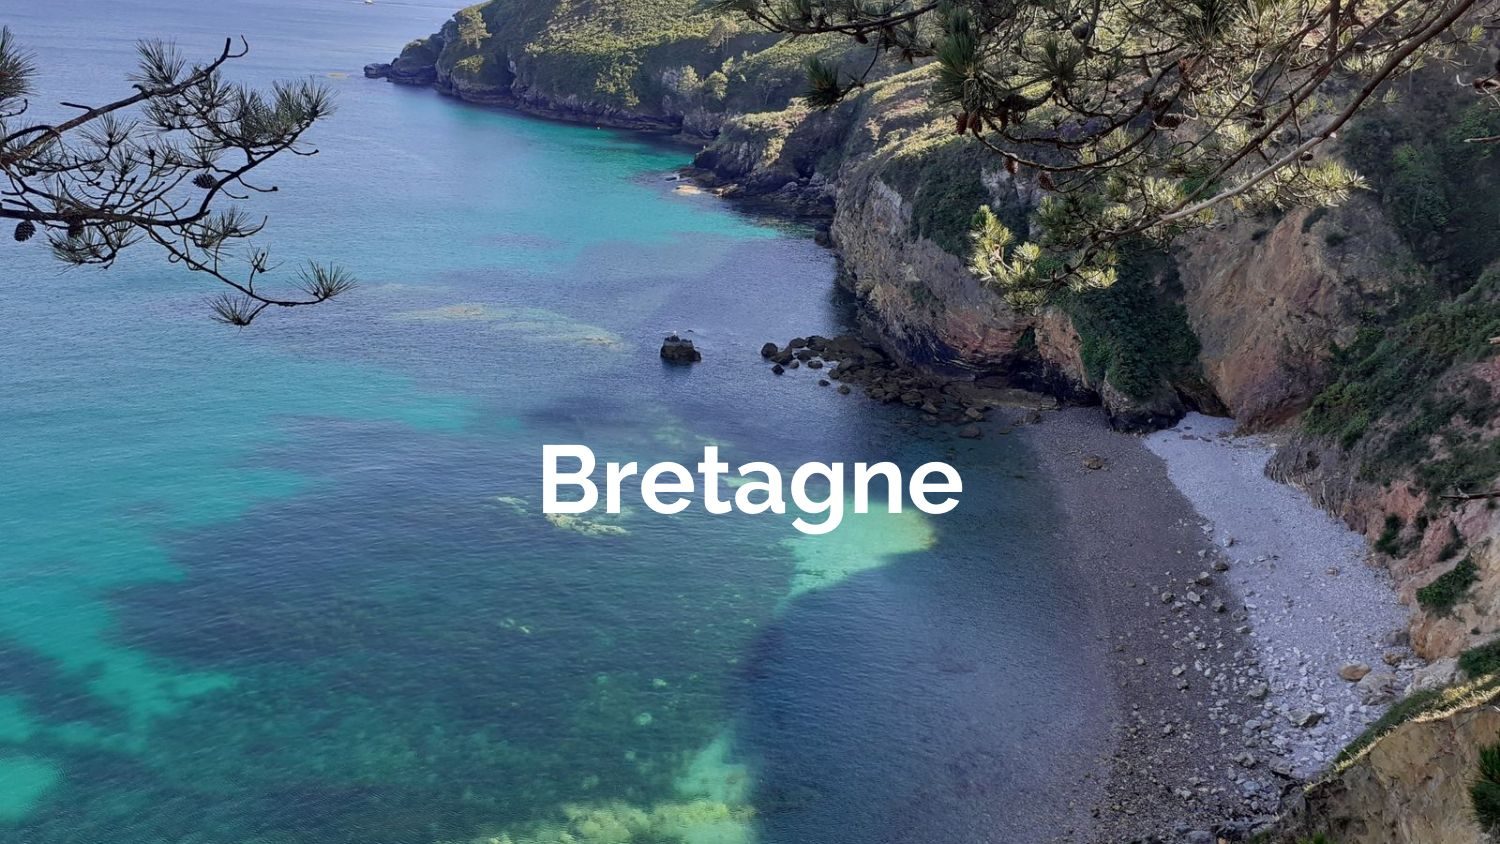 Van life Bretagne 2020